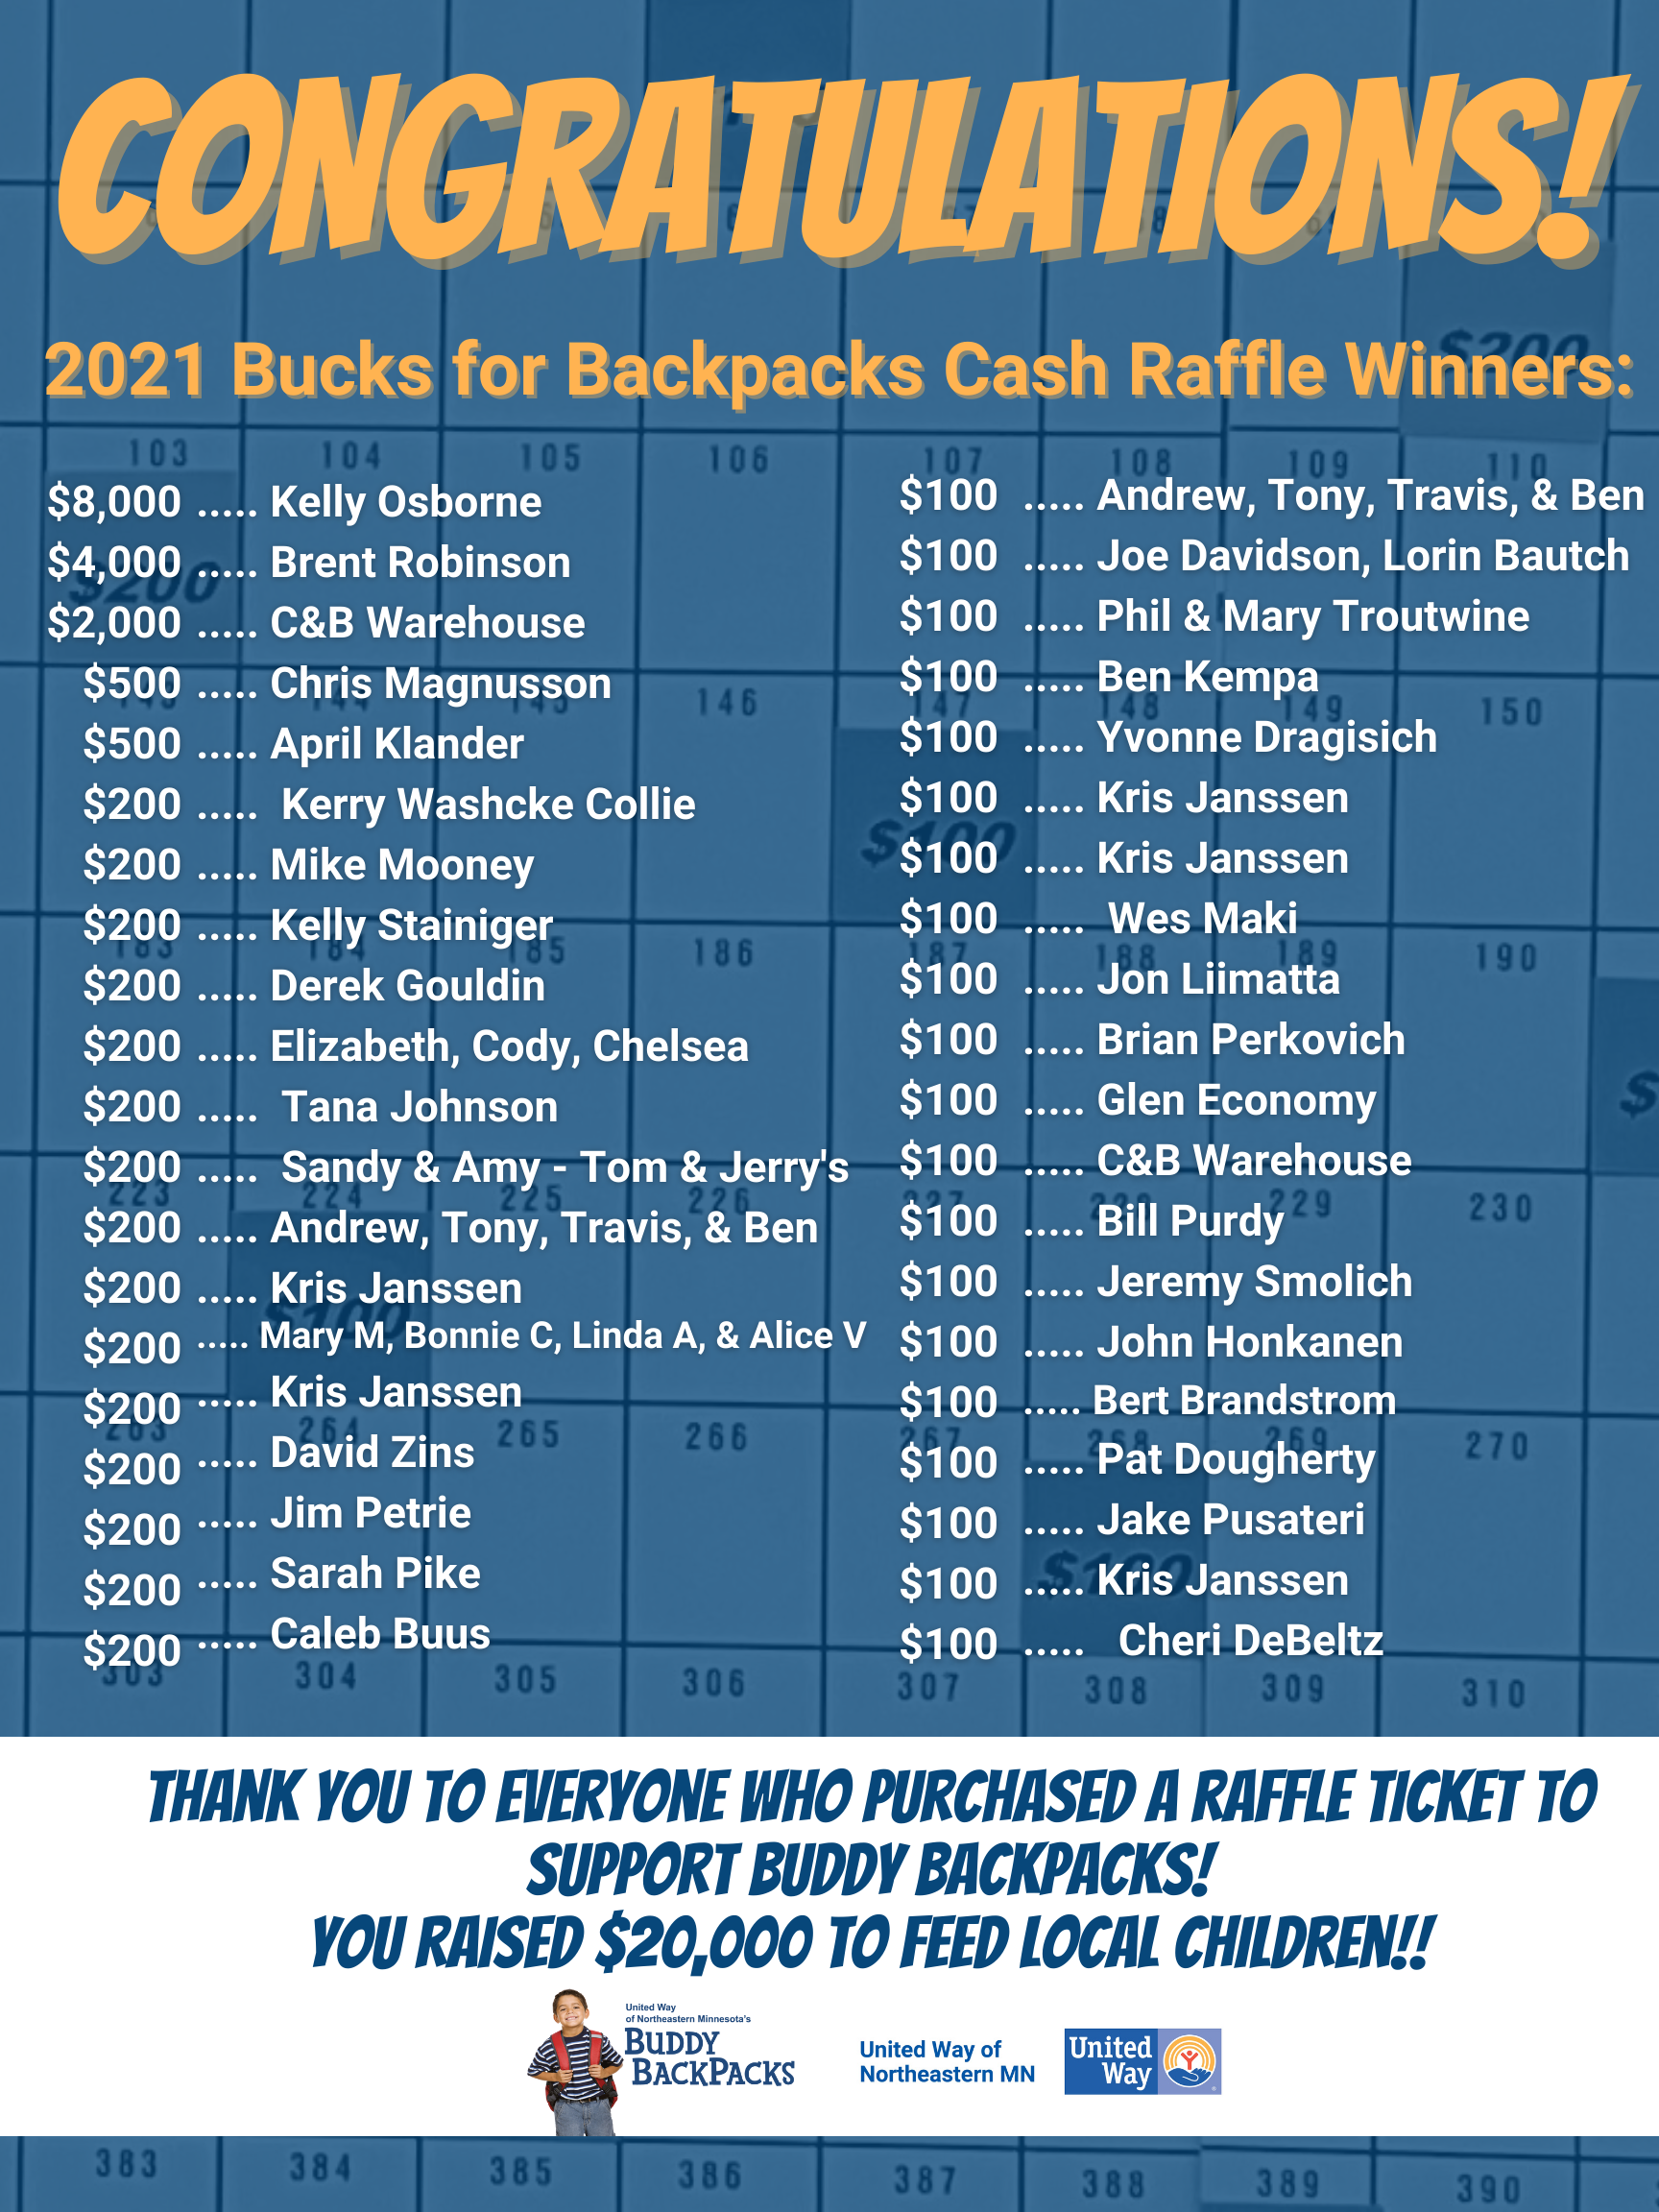 Congratulations Bucks for Backpacks 2021 winners!